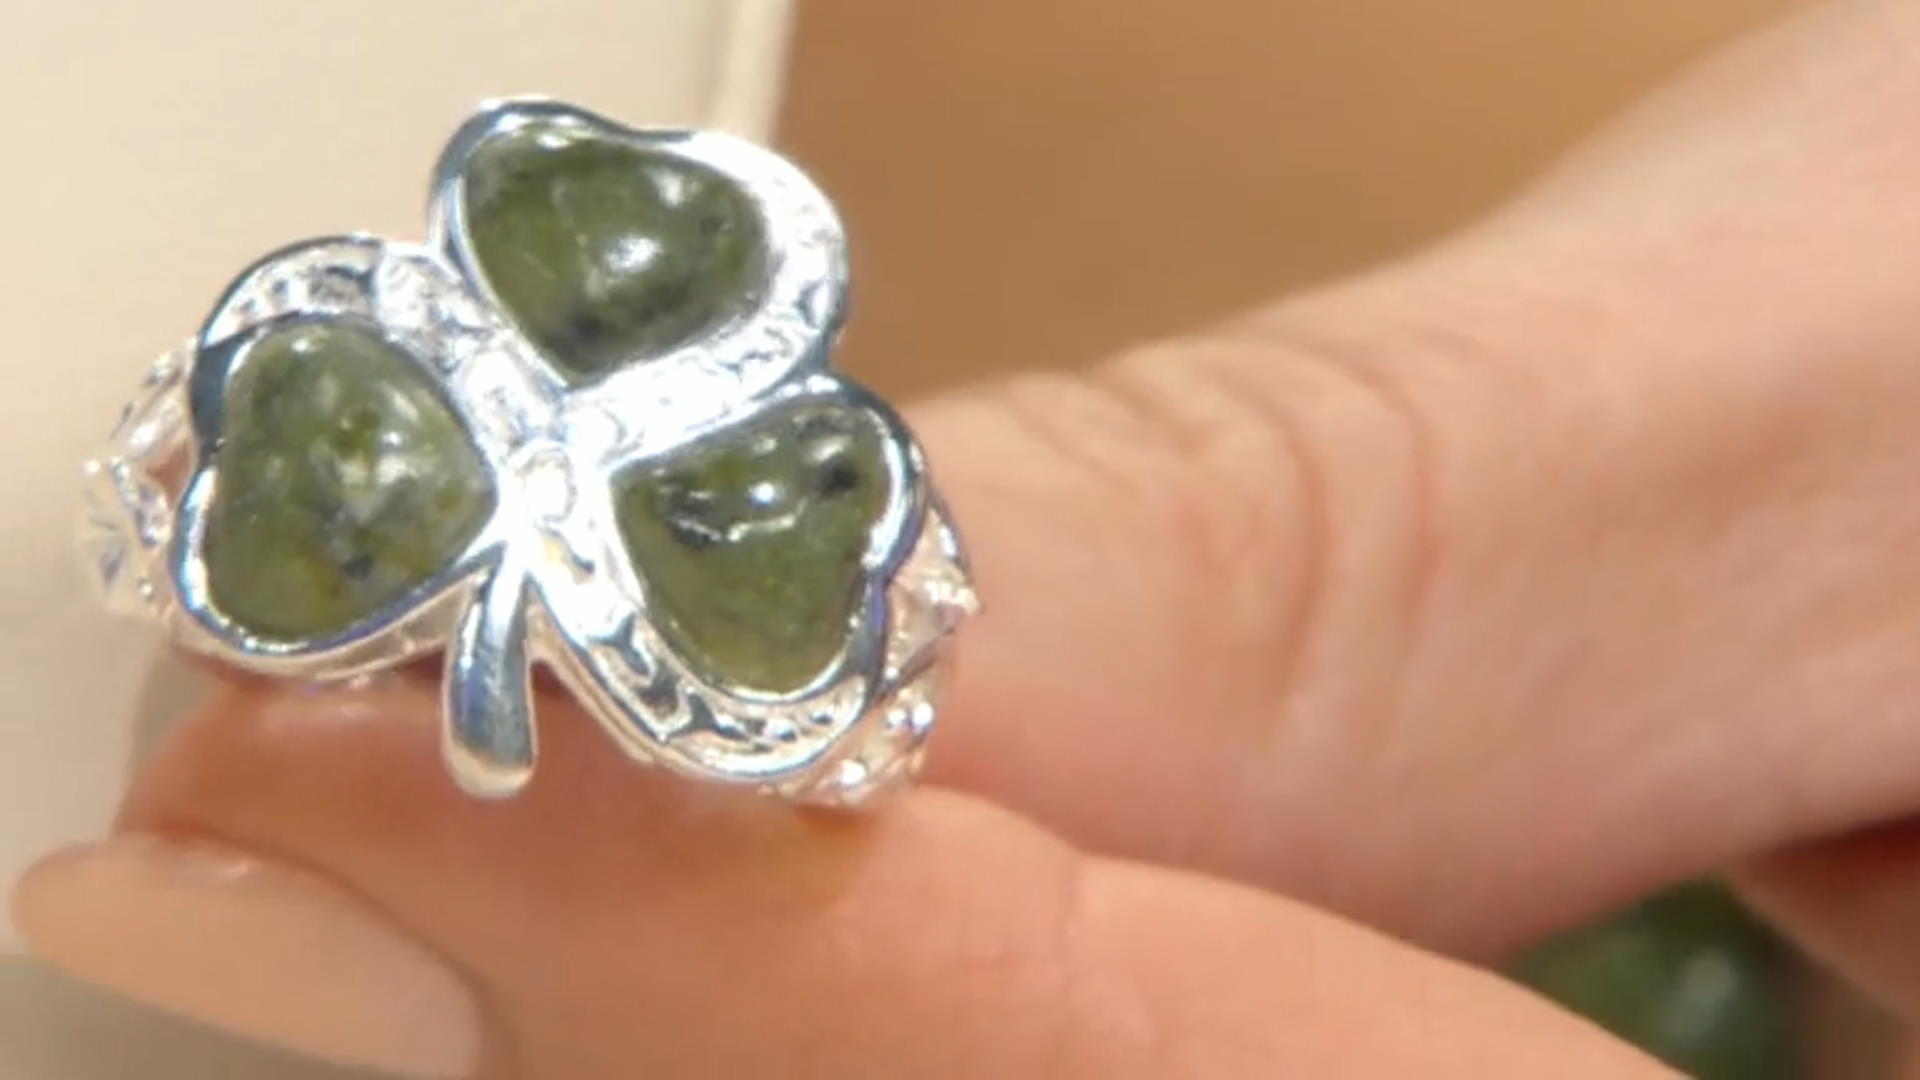 Green Connemara Marble Sterling Silver Shamrock Ring Video Thumbnail